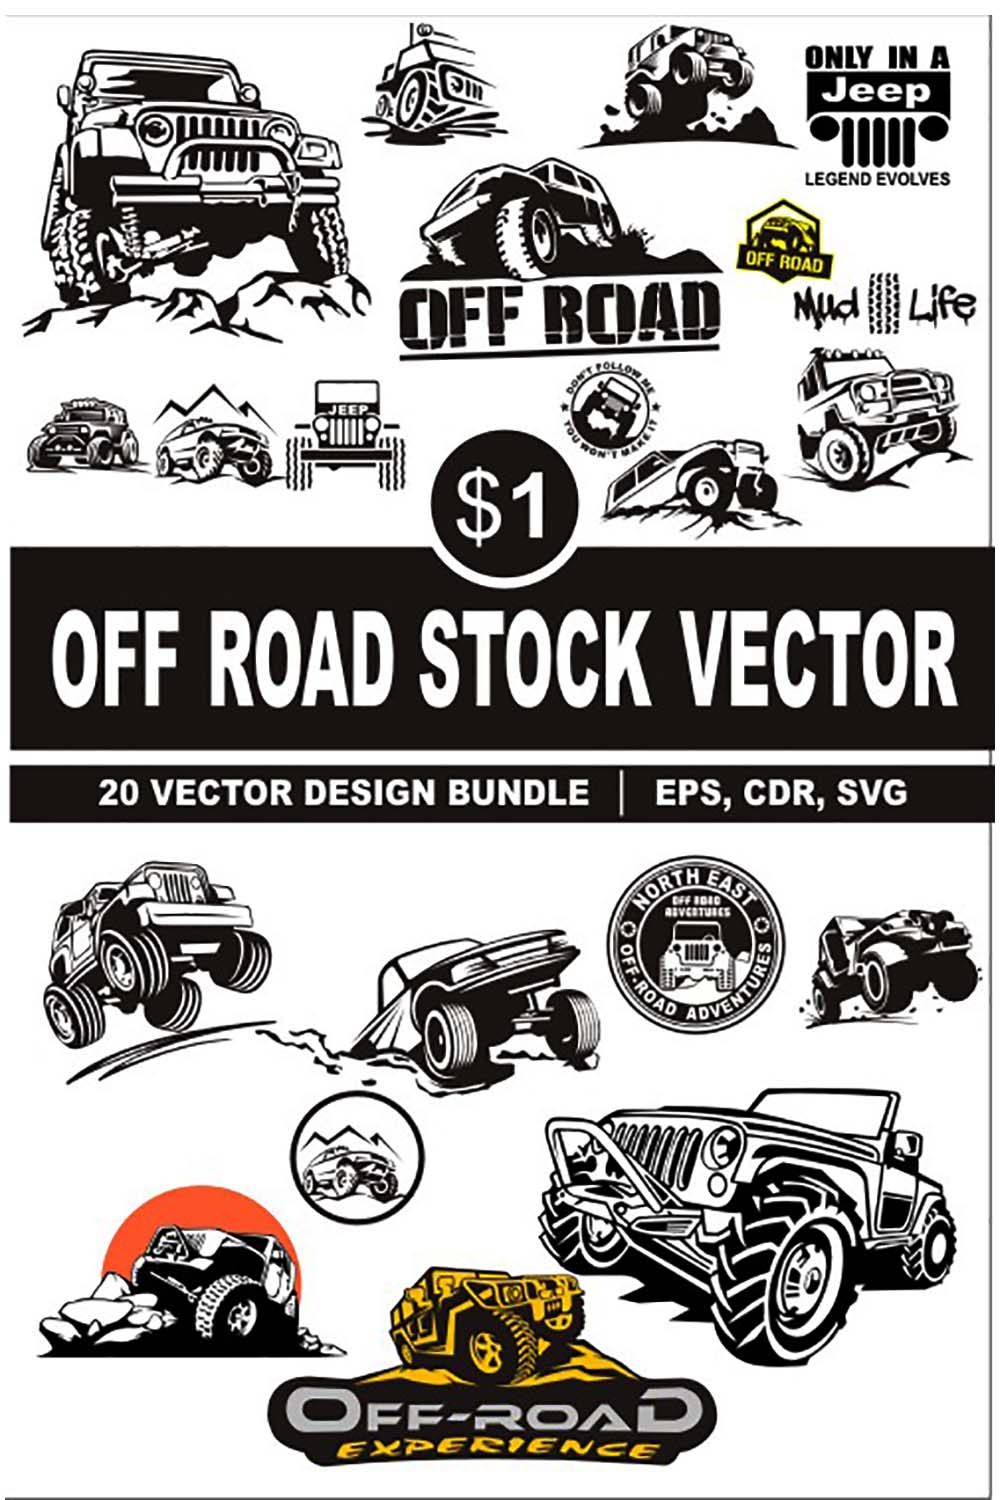 Off Road Truck Stock Vector design illustration pinterest preview image.